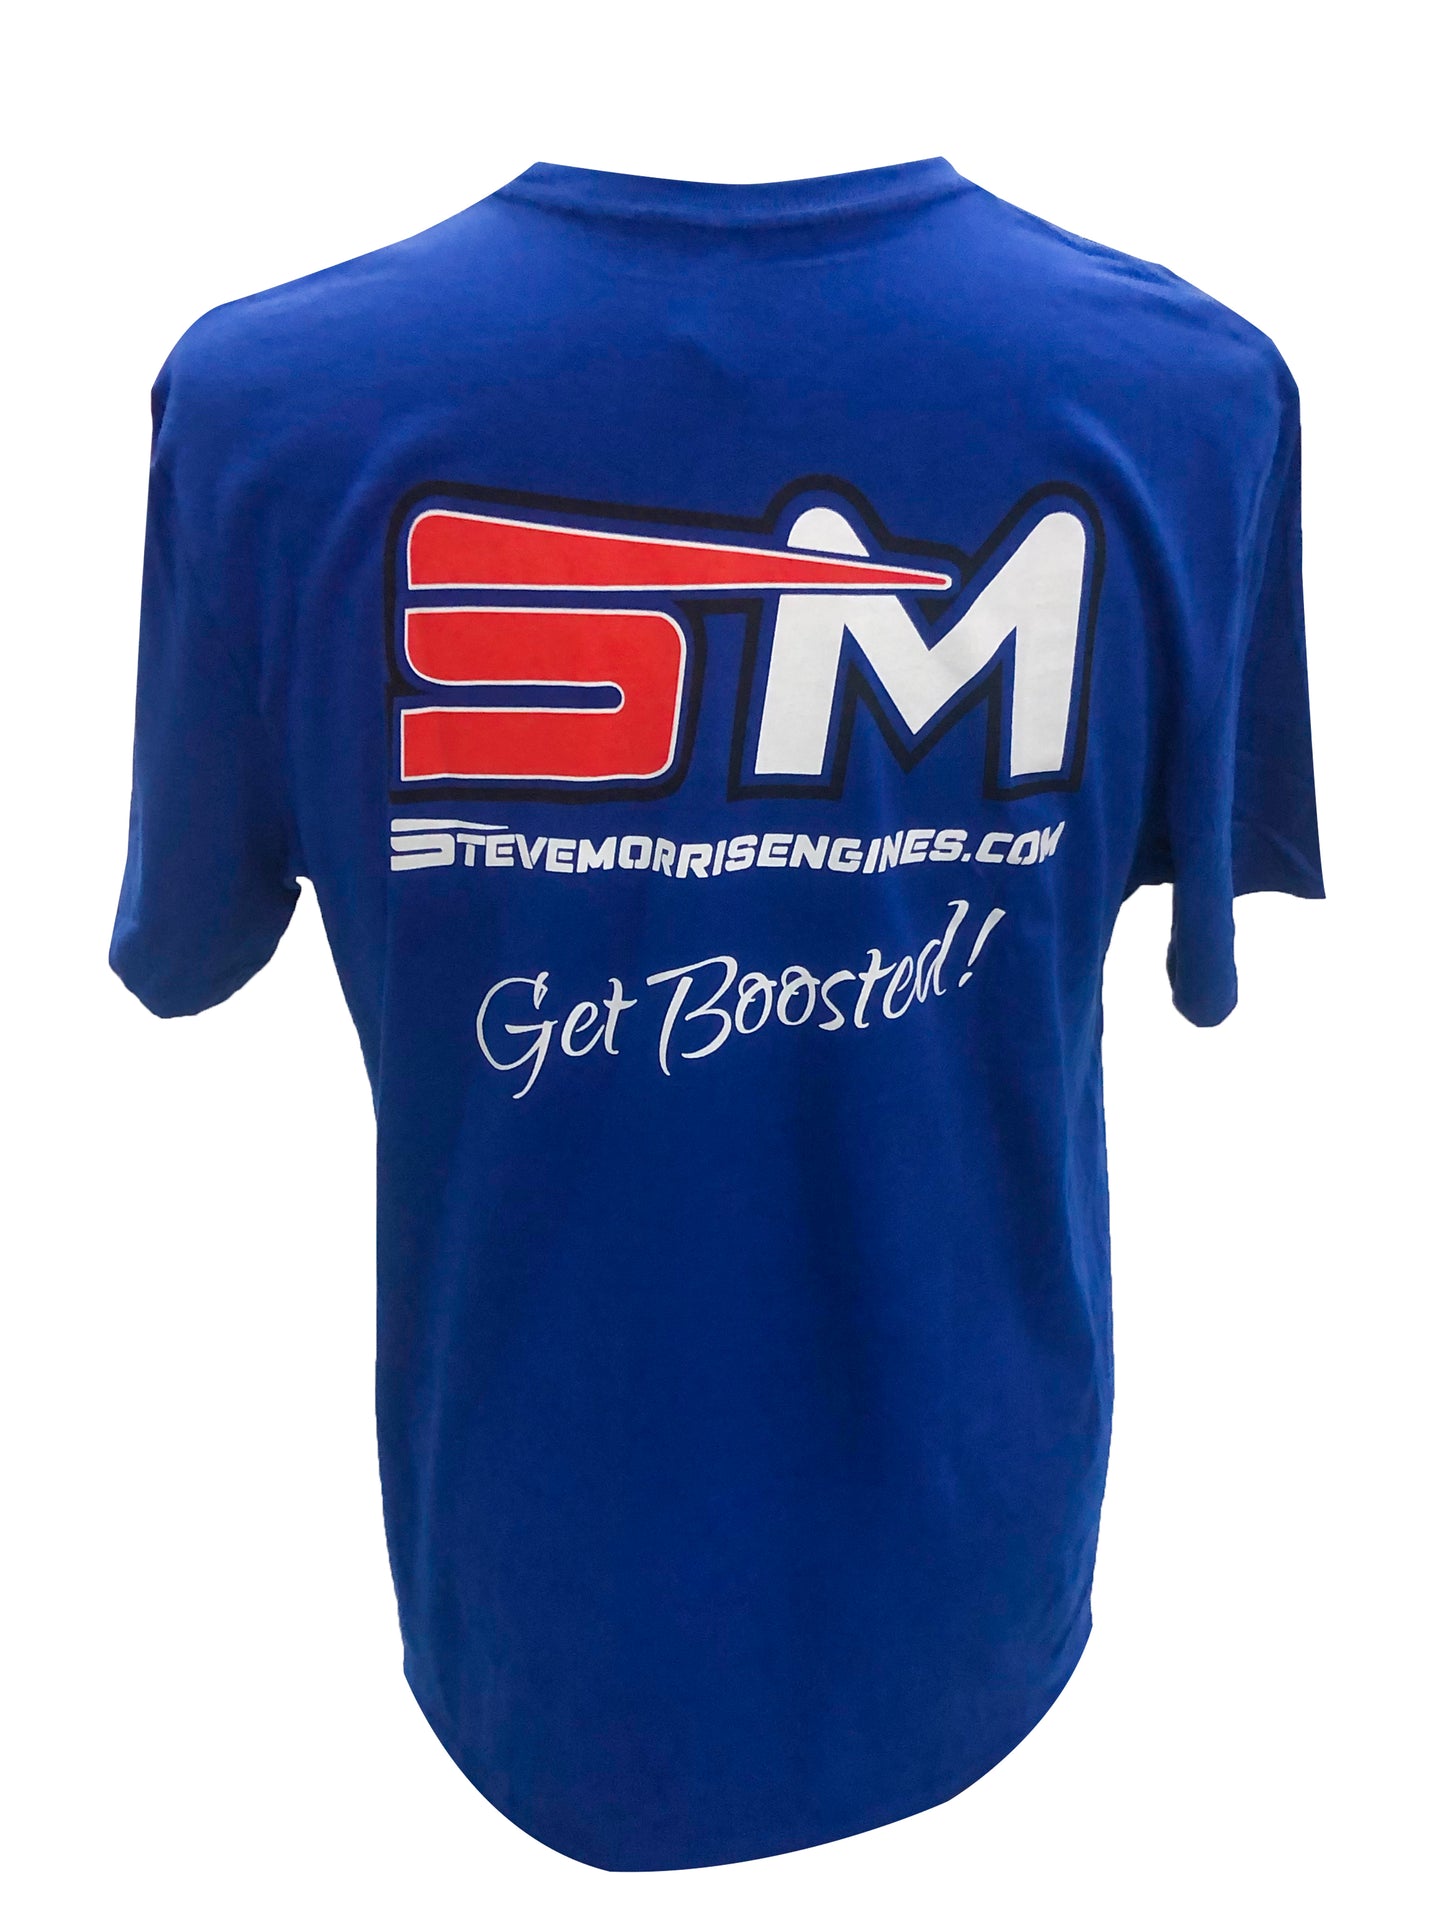 SM Logo T-Shirt - Bright Colors